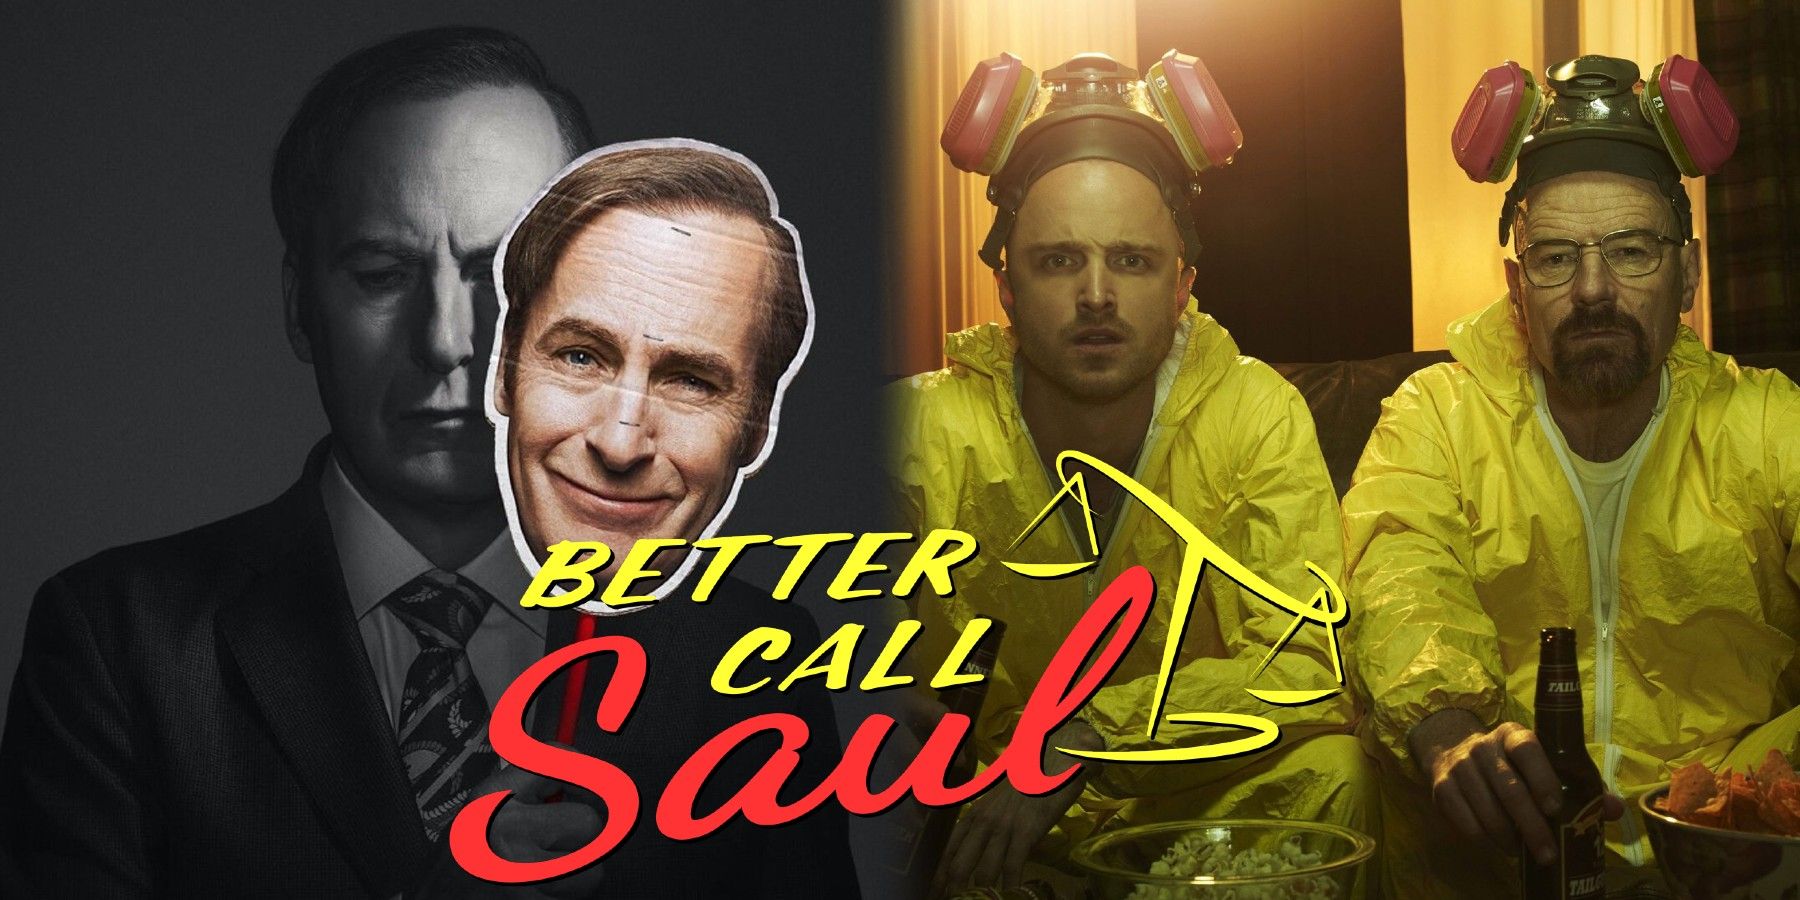 Better Call Saul Bob Odenkirk Bryan Cranston Aaron Paul Goodman Jimmy McGill Walter White Jesse Pinkman